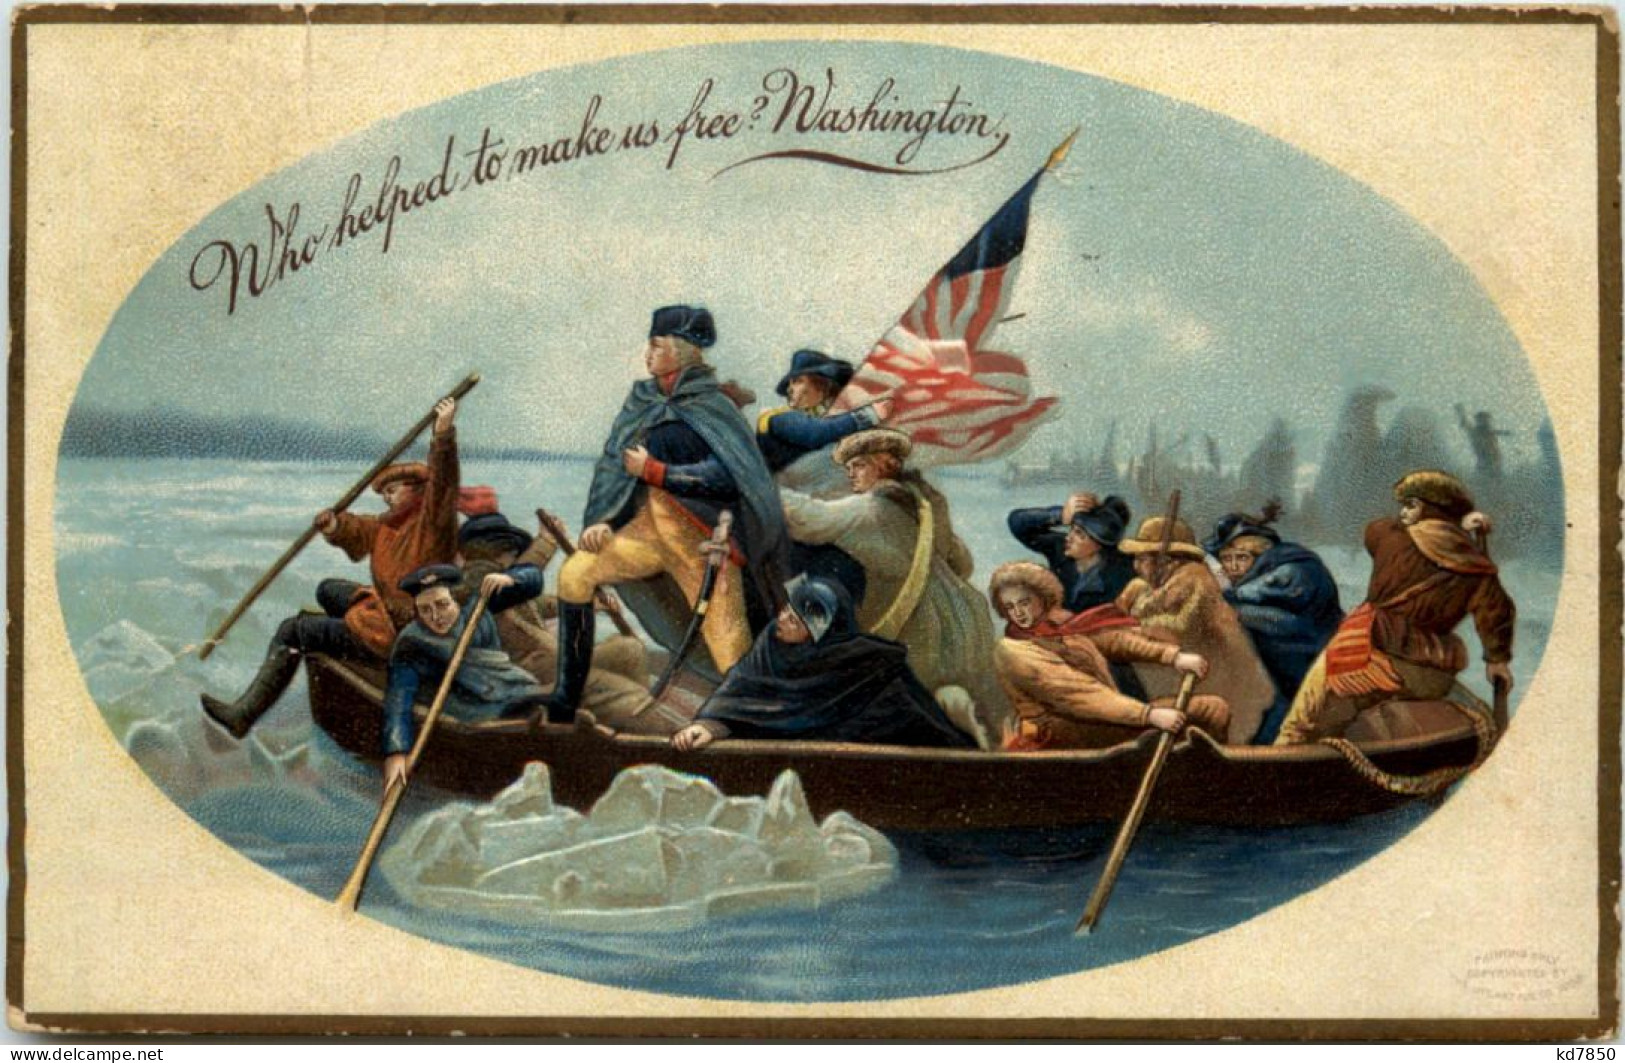 George Washington - Who Helped To Make Us Free? - Presidenti